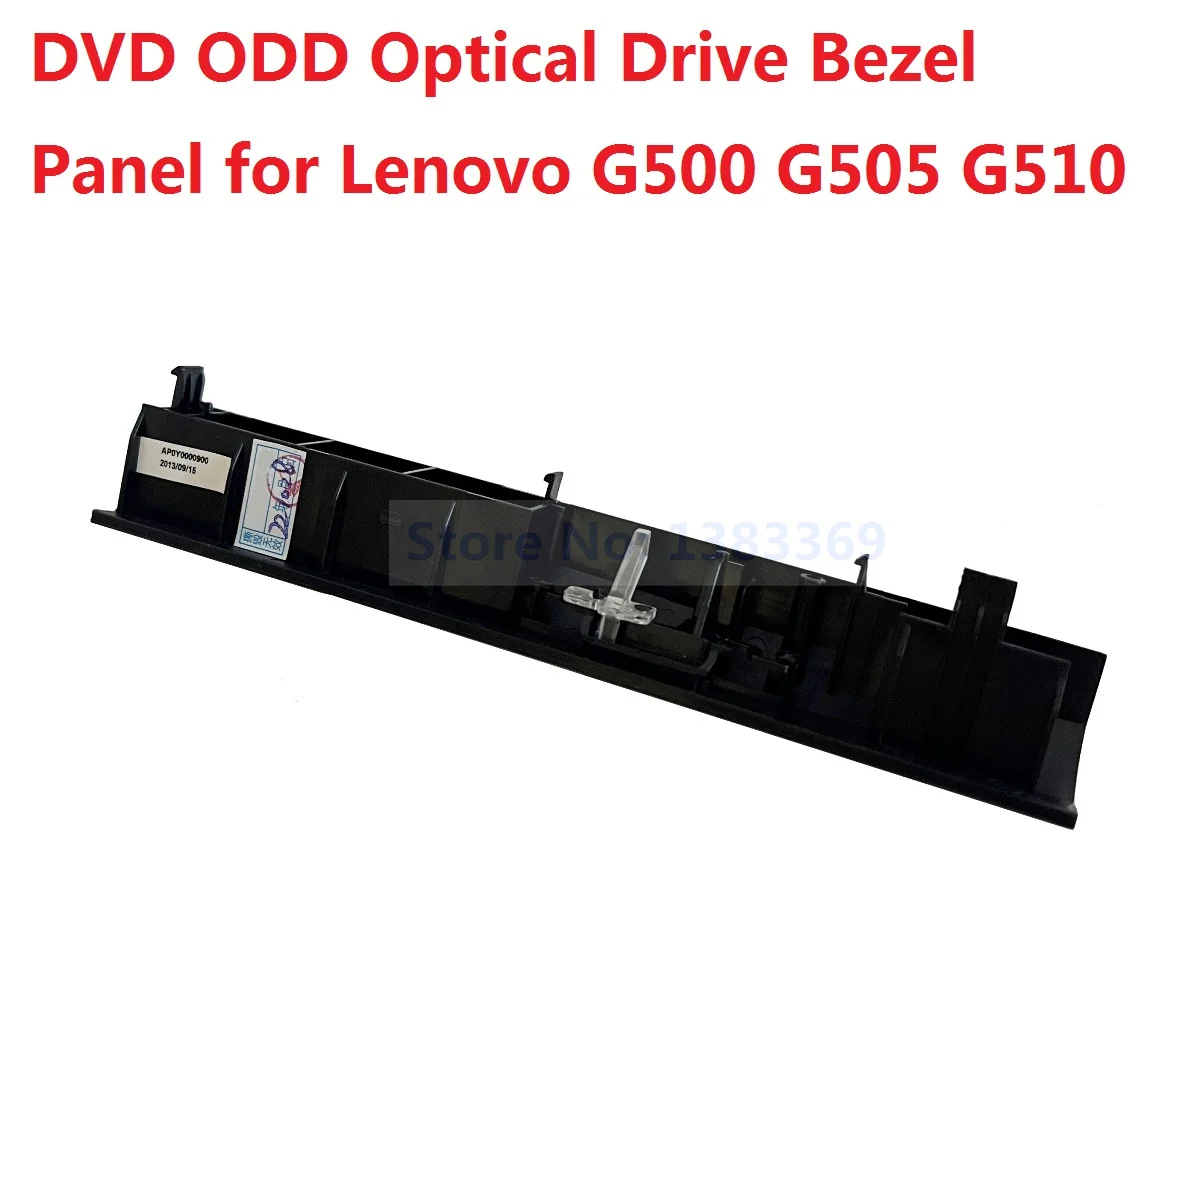 DVD-RW, DVD מוזר CD הכונן האופטי הקאדילק לוח הדלת בלוחית לוח הבקרה כיסוי פנל קדמי לבלבל סוגר עבור Lenovo G500 G505 G510 - 1